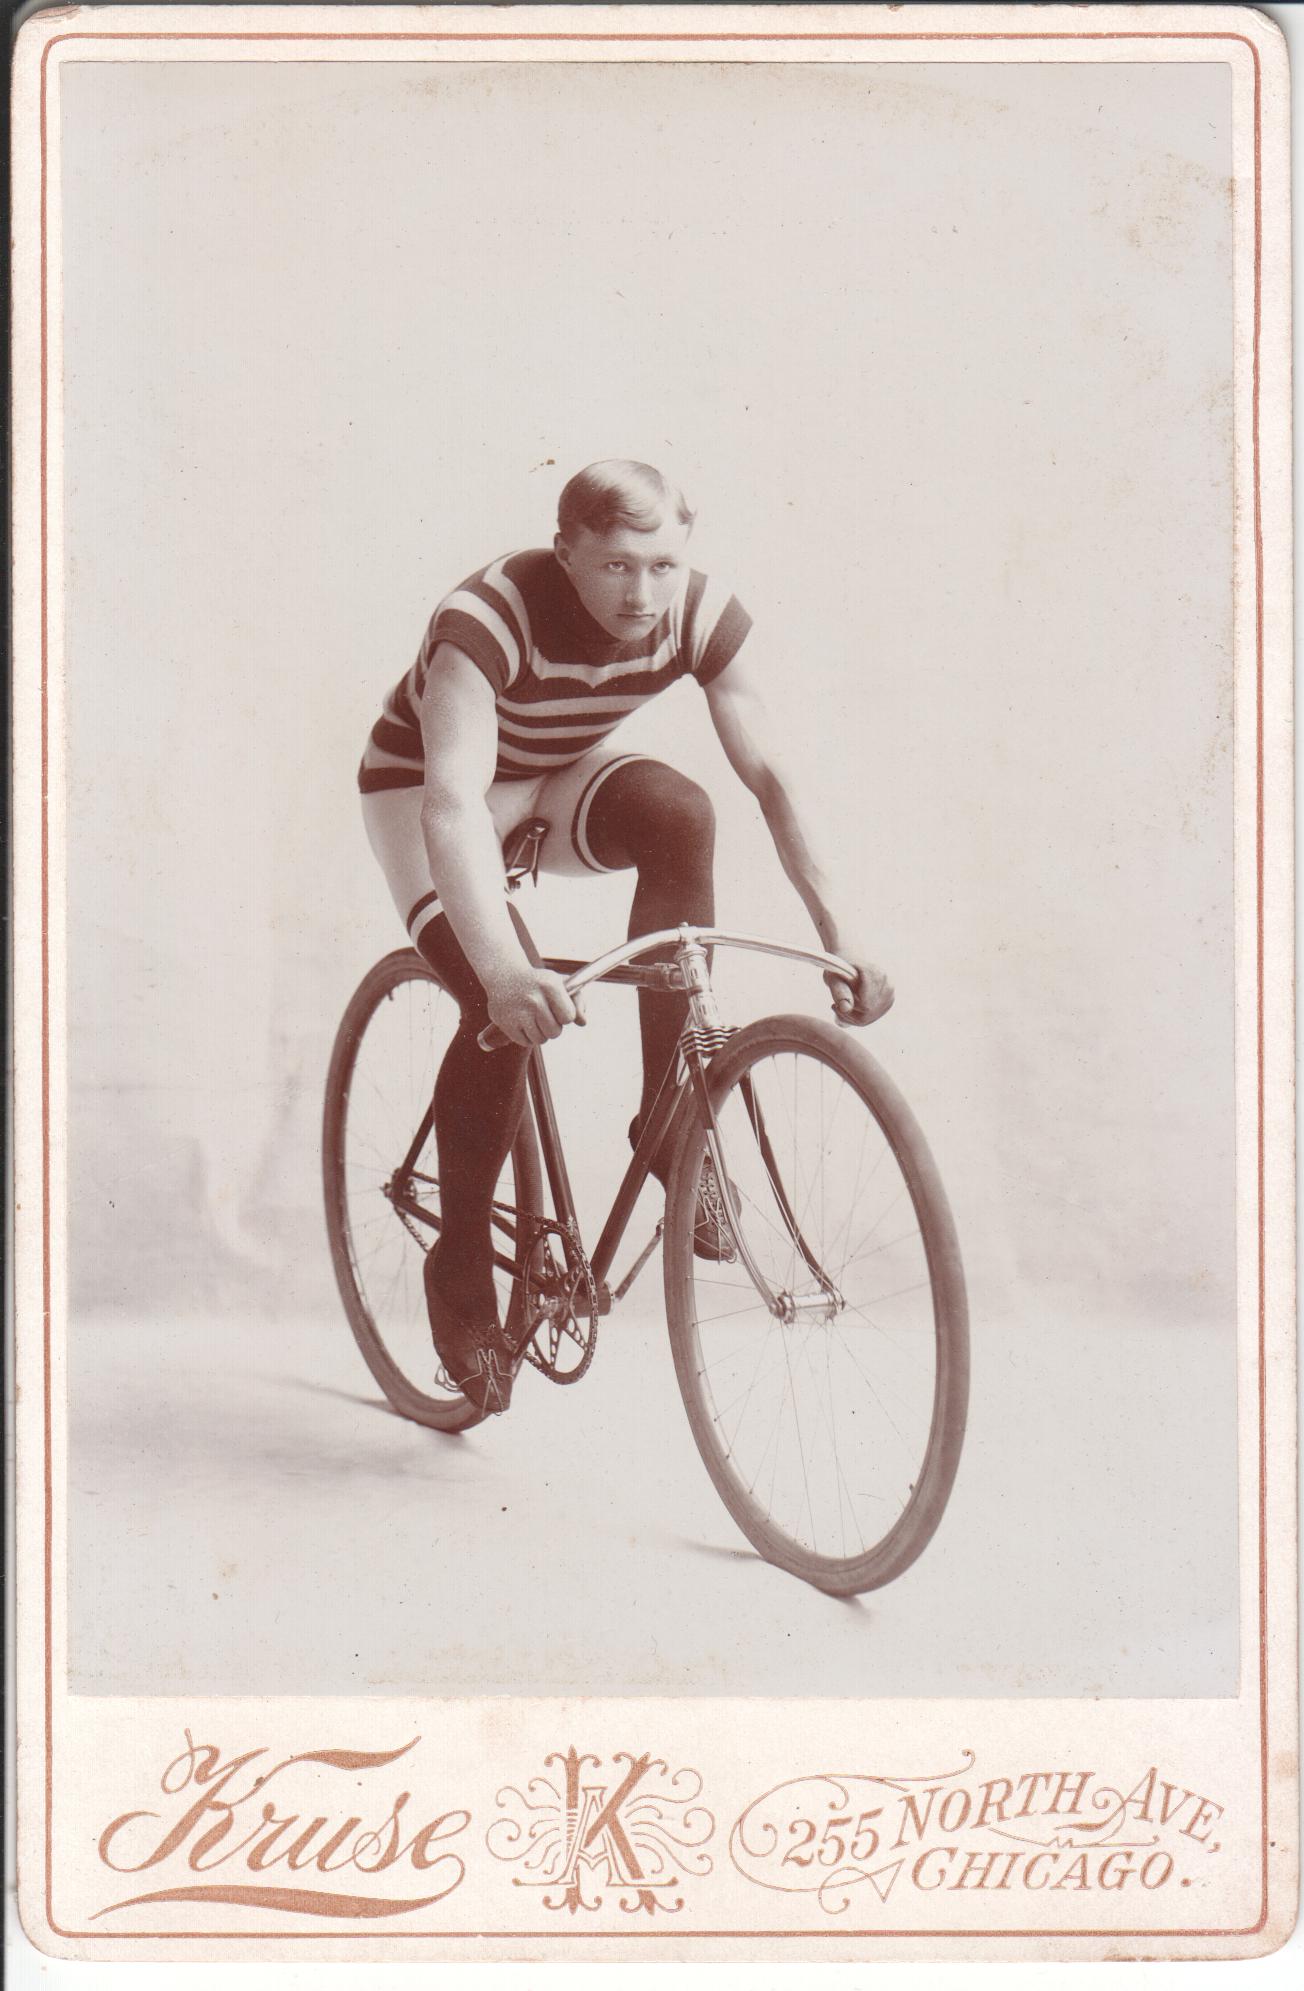 Racing cyclists circa 1900